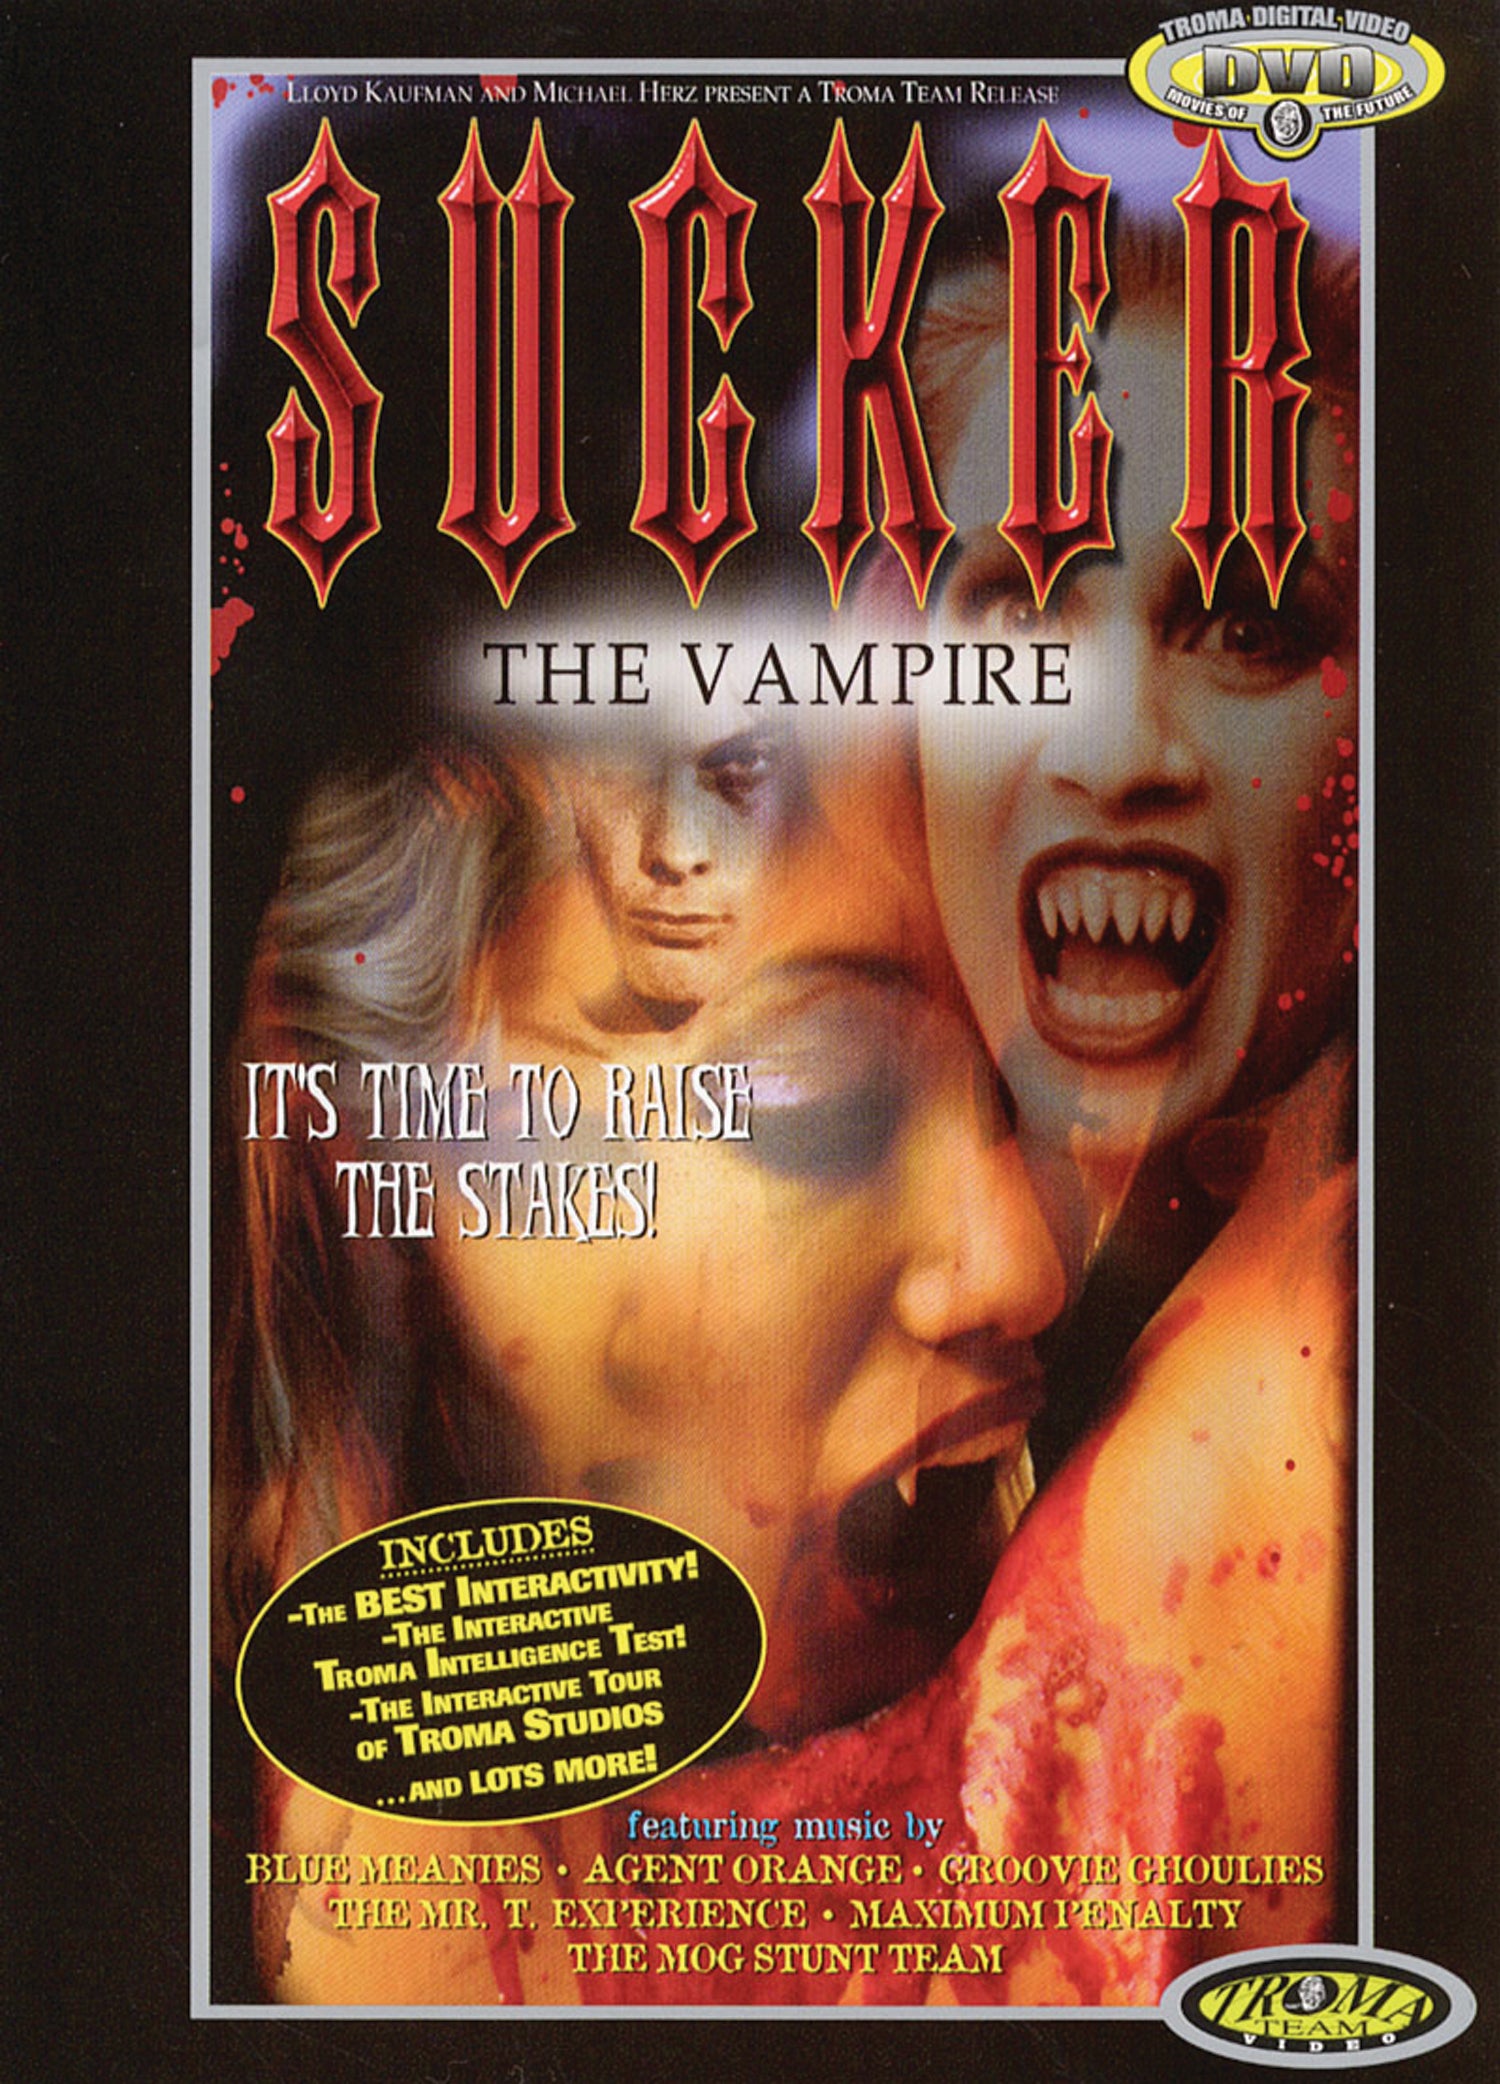 SUCKER THE VAMPIRE DVD